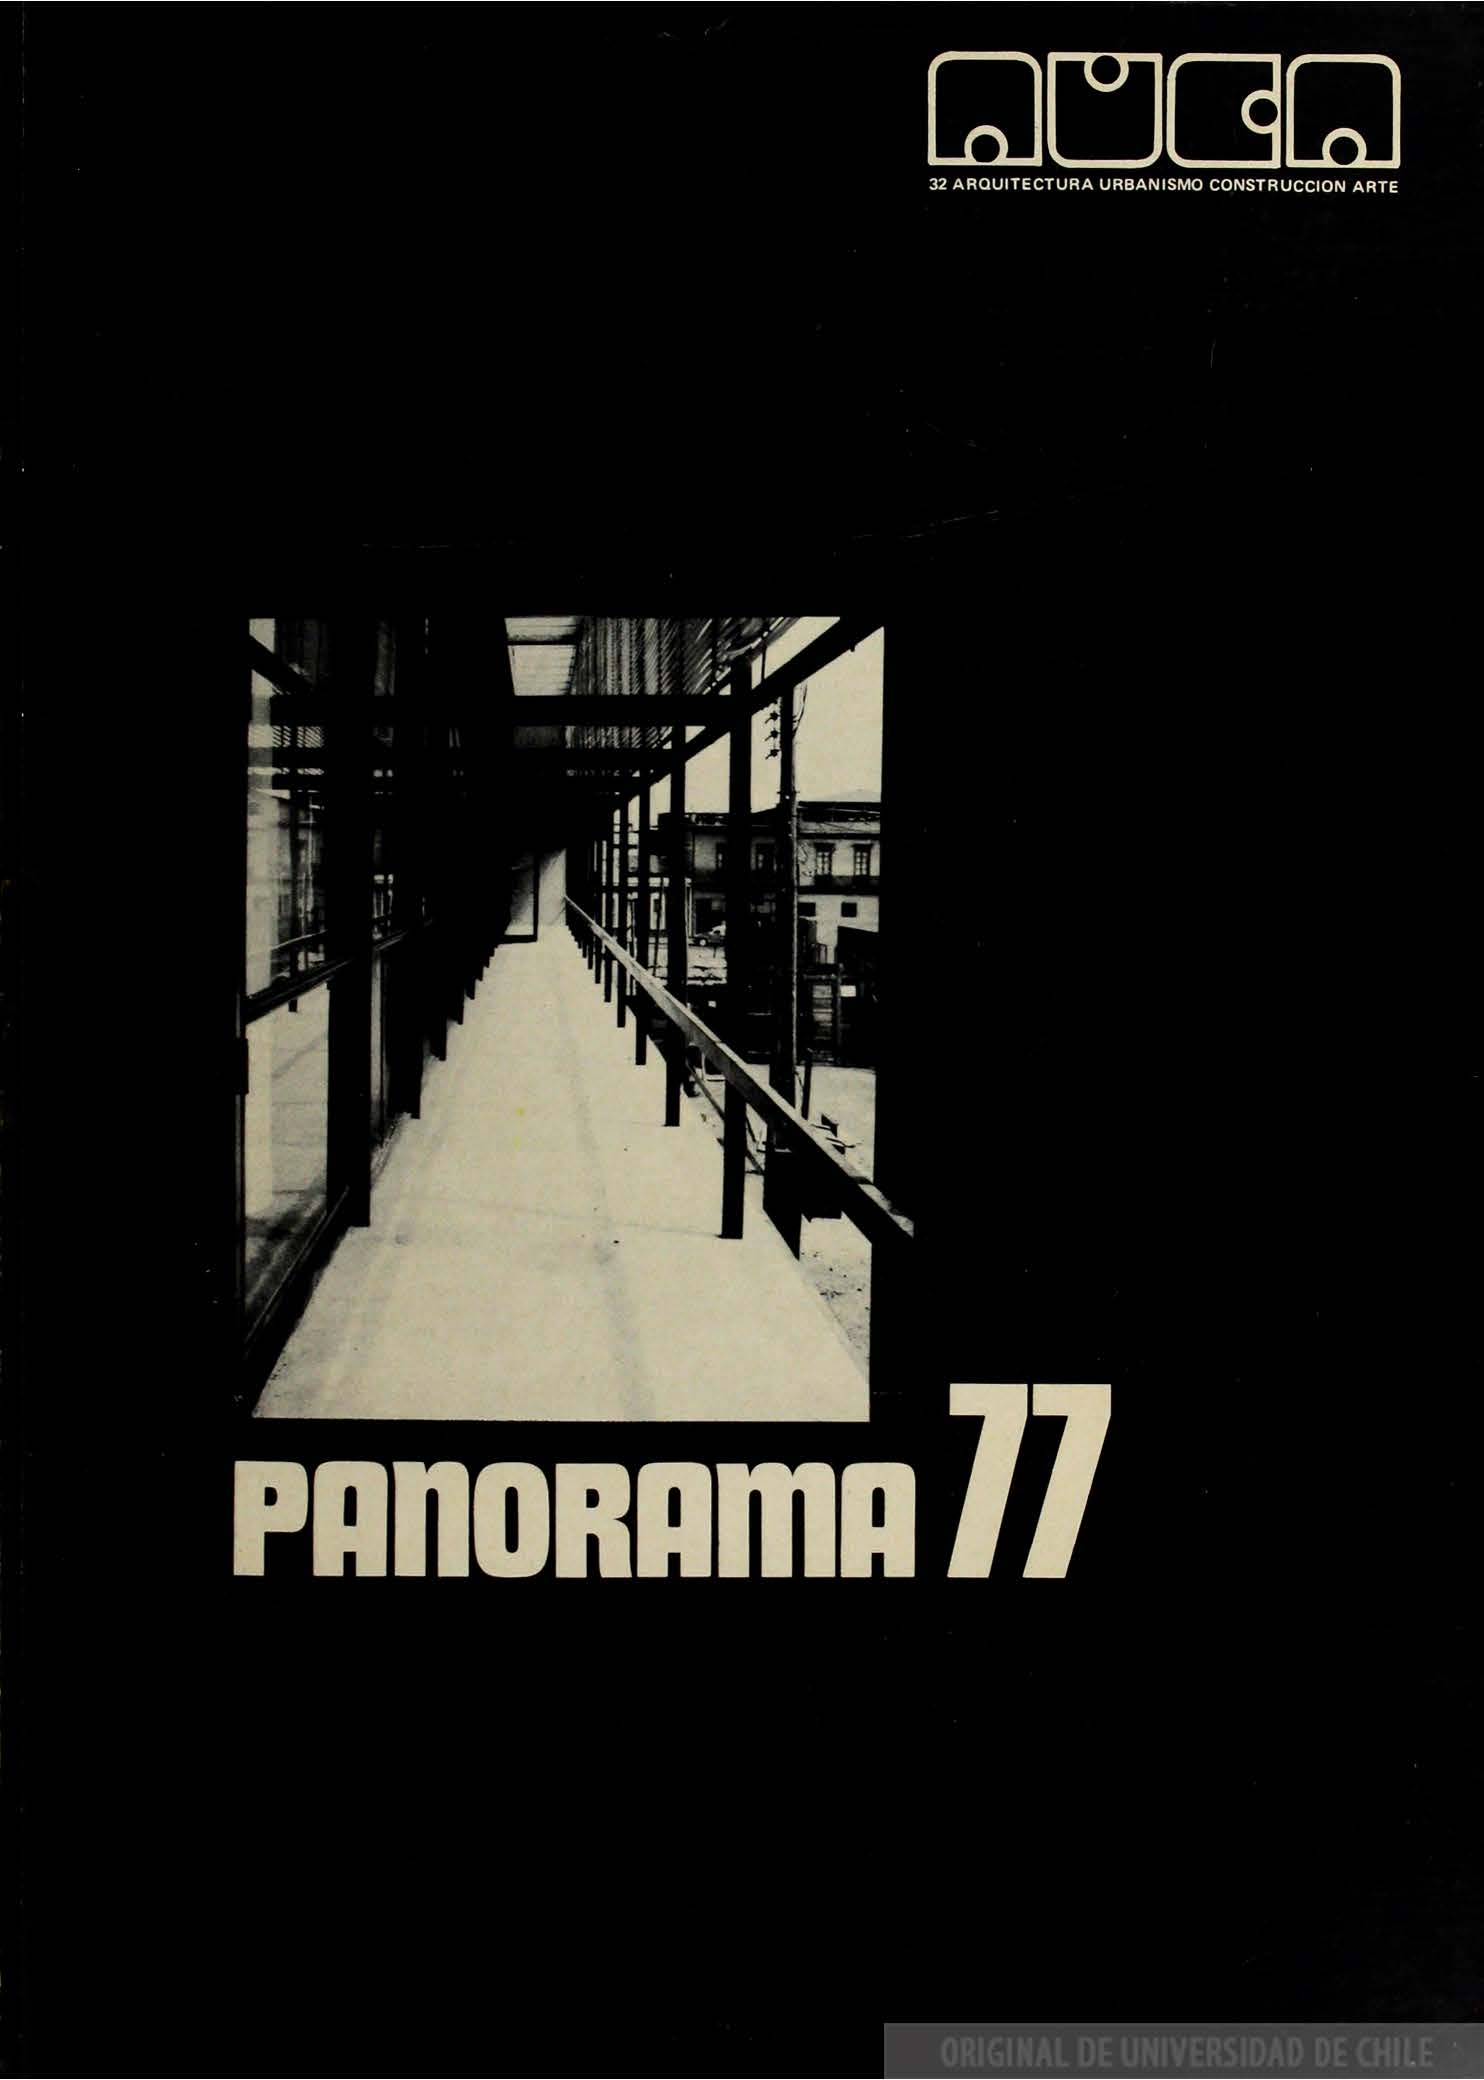 											Ver Núm. 32 (1977): Panorama "77"
										